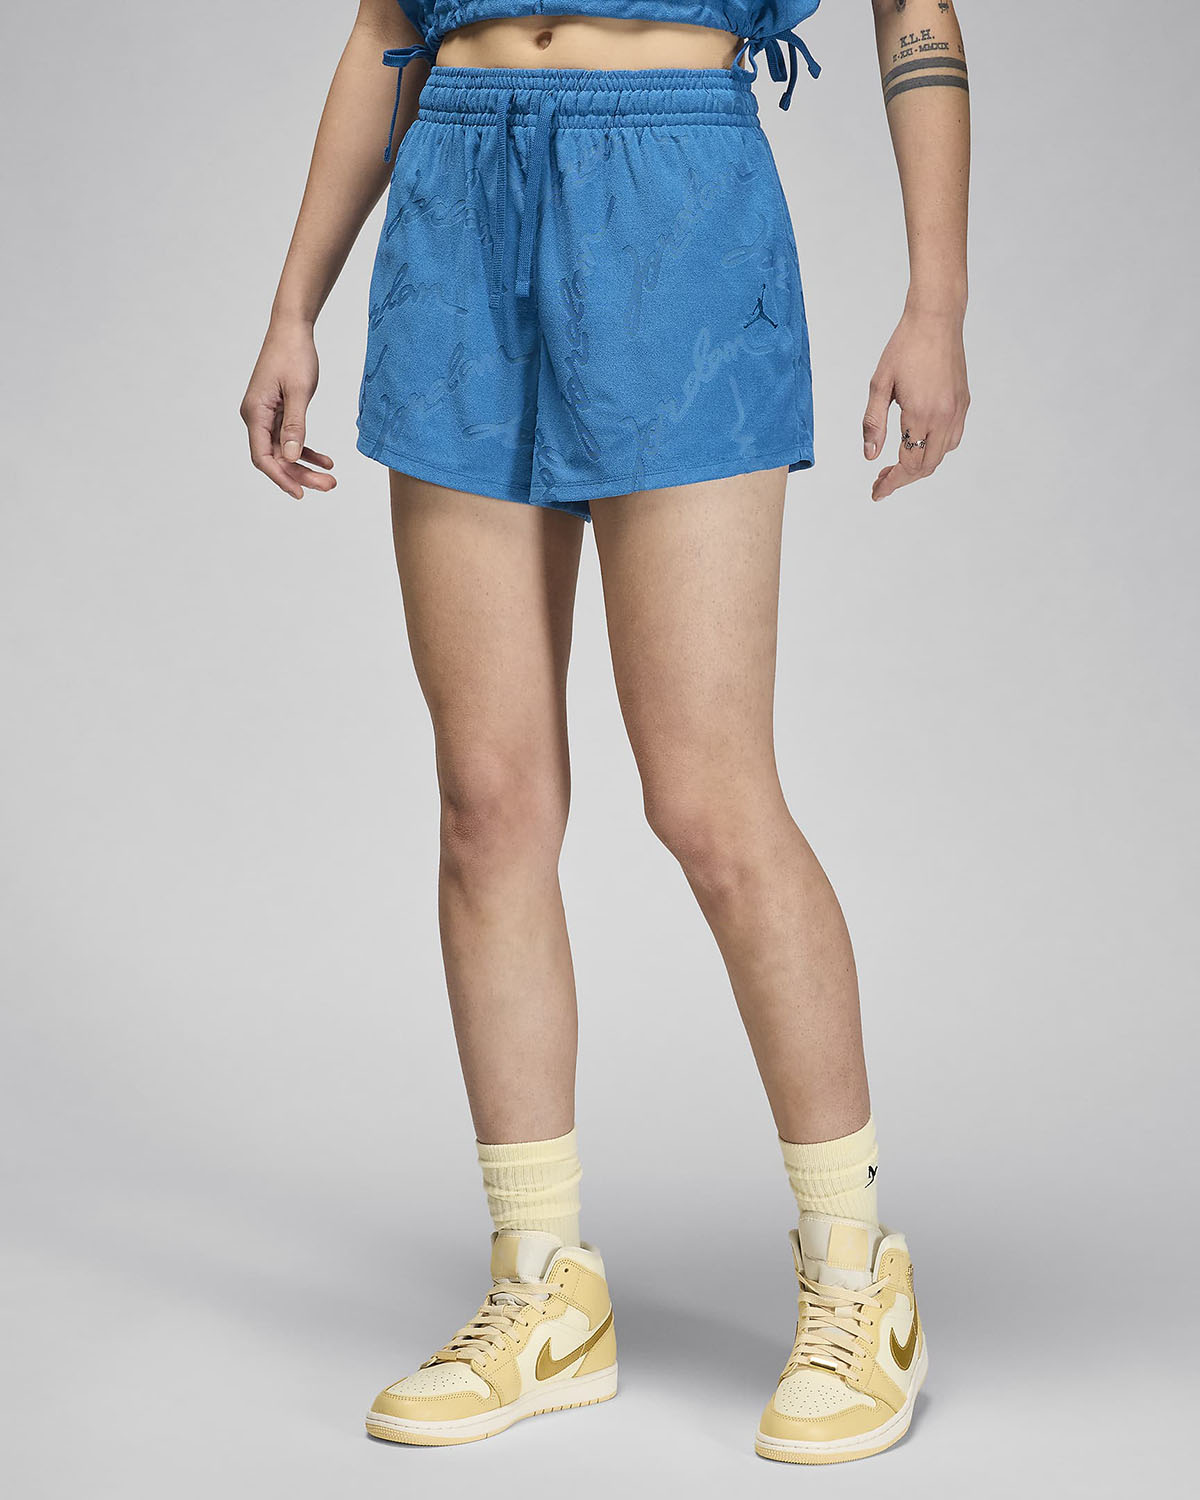 Jordan Womens Knit Shorts Industrial Blue 1